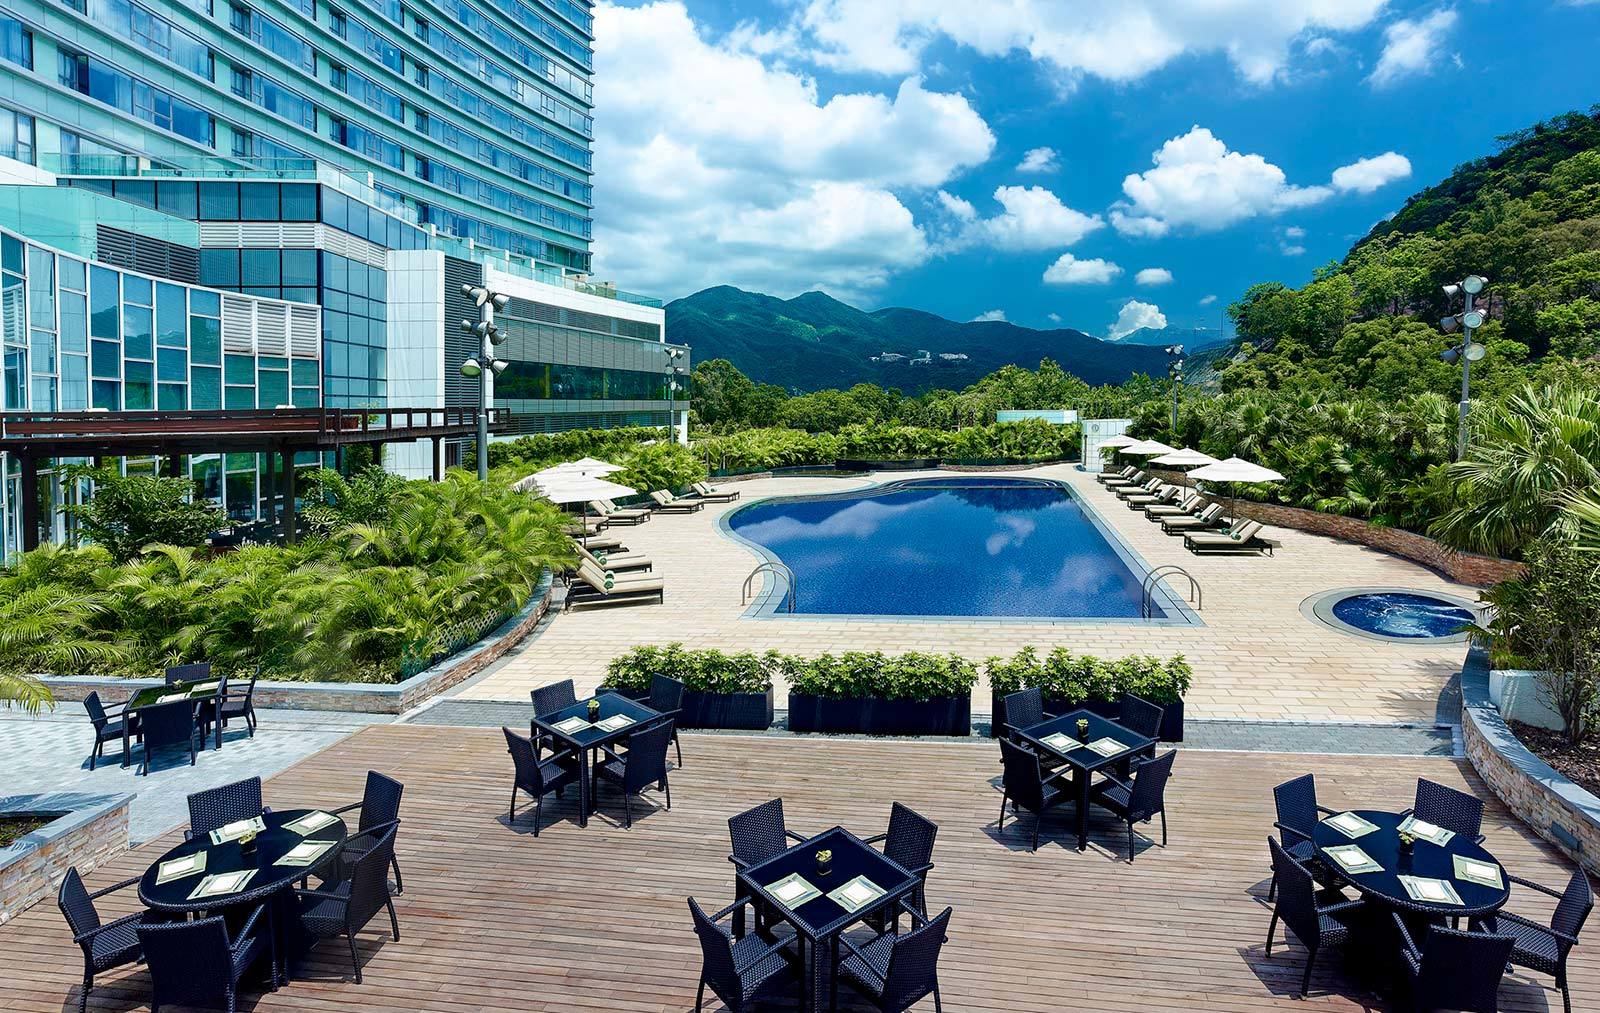 Outdoor pool and bar at Hyatt Regency Hong Kong, Sha Tin, a hotel in New Territories